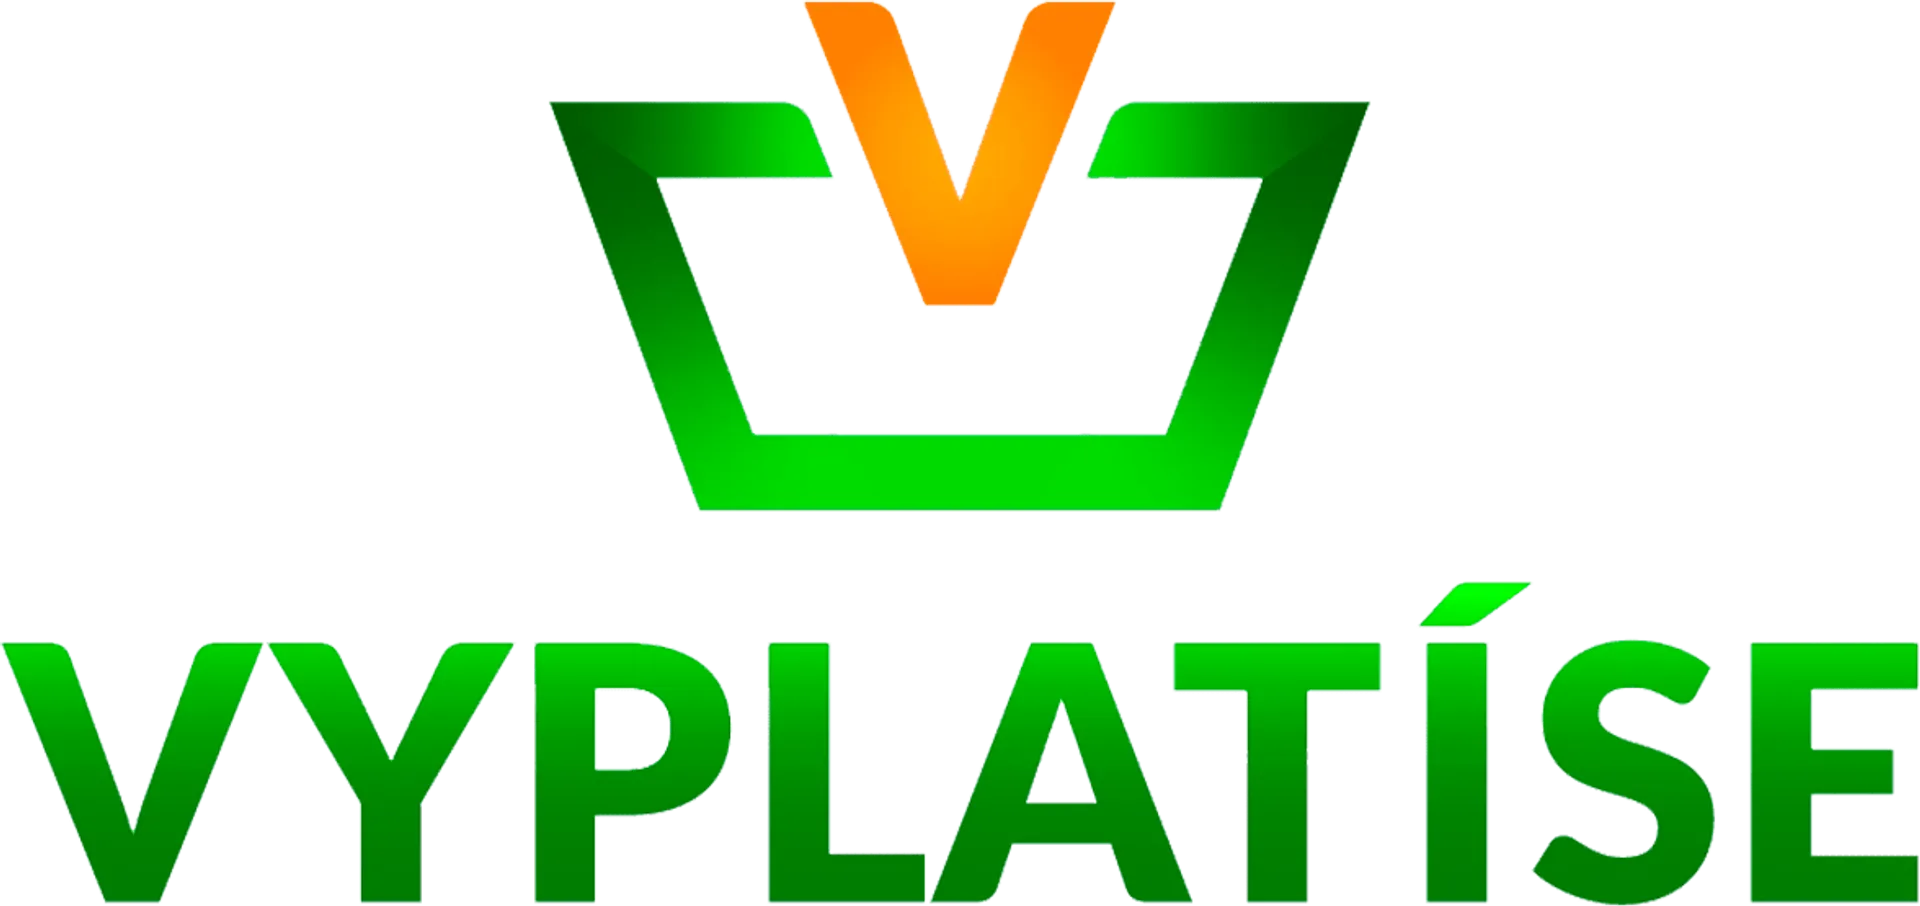 VYPLATÍSE logo of current catalogue